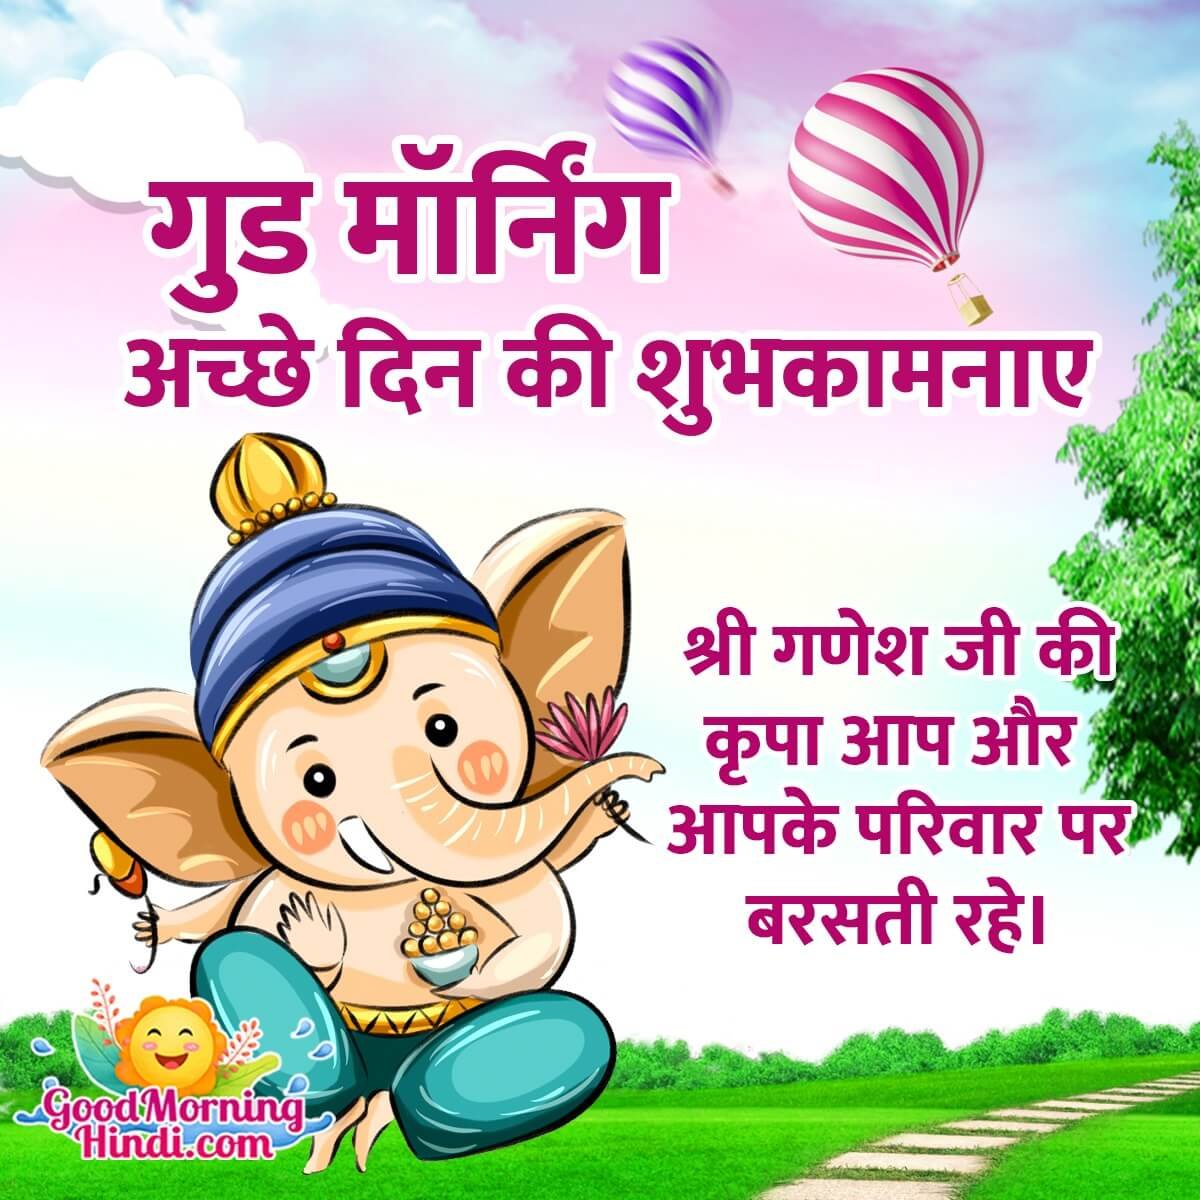 Good Morning Ganesha Hindi Images - Good Morning Wishes & Images In Hindi